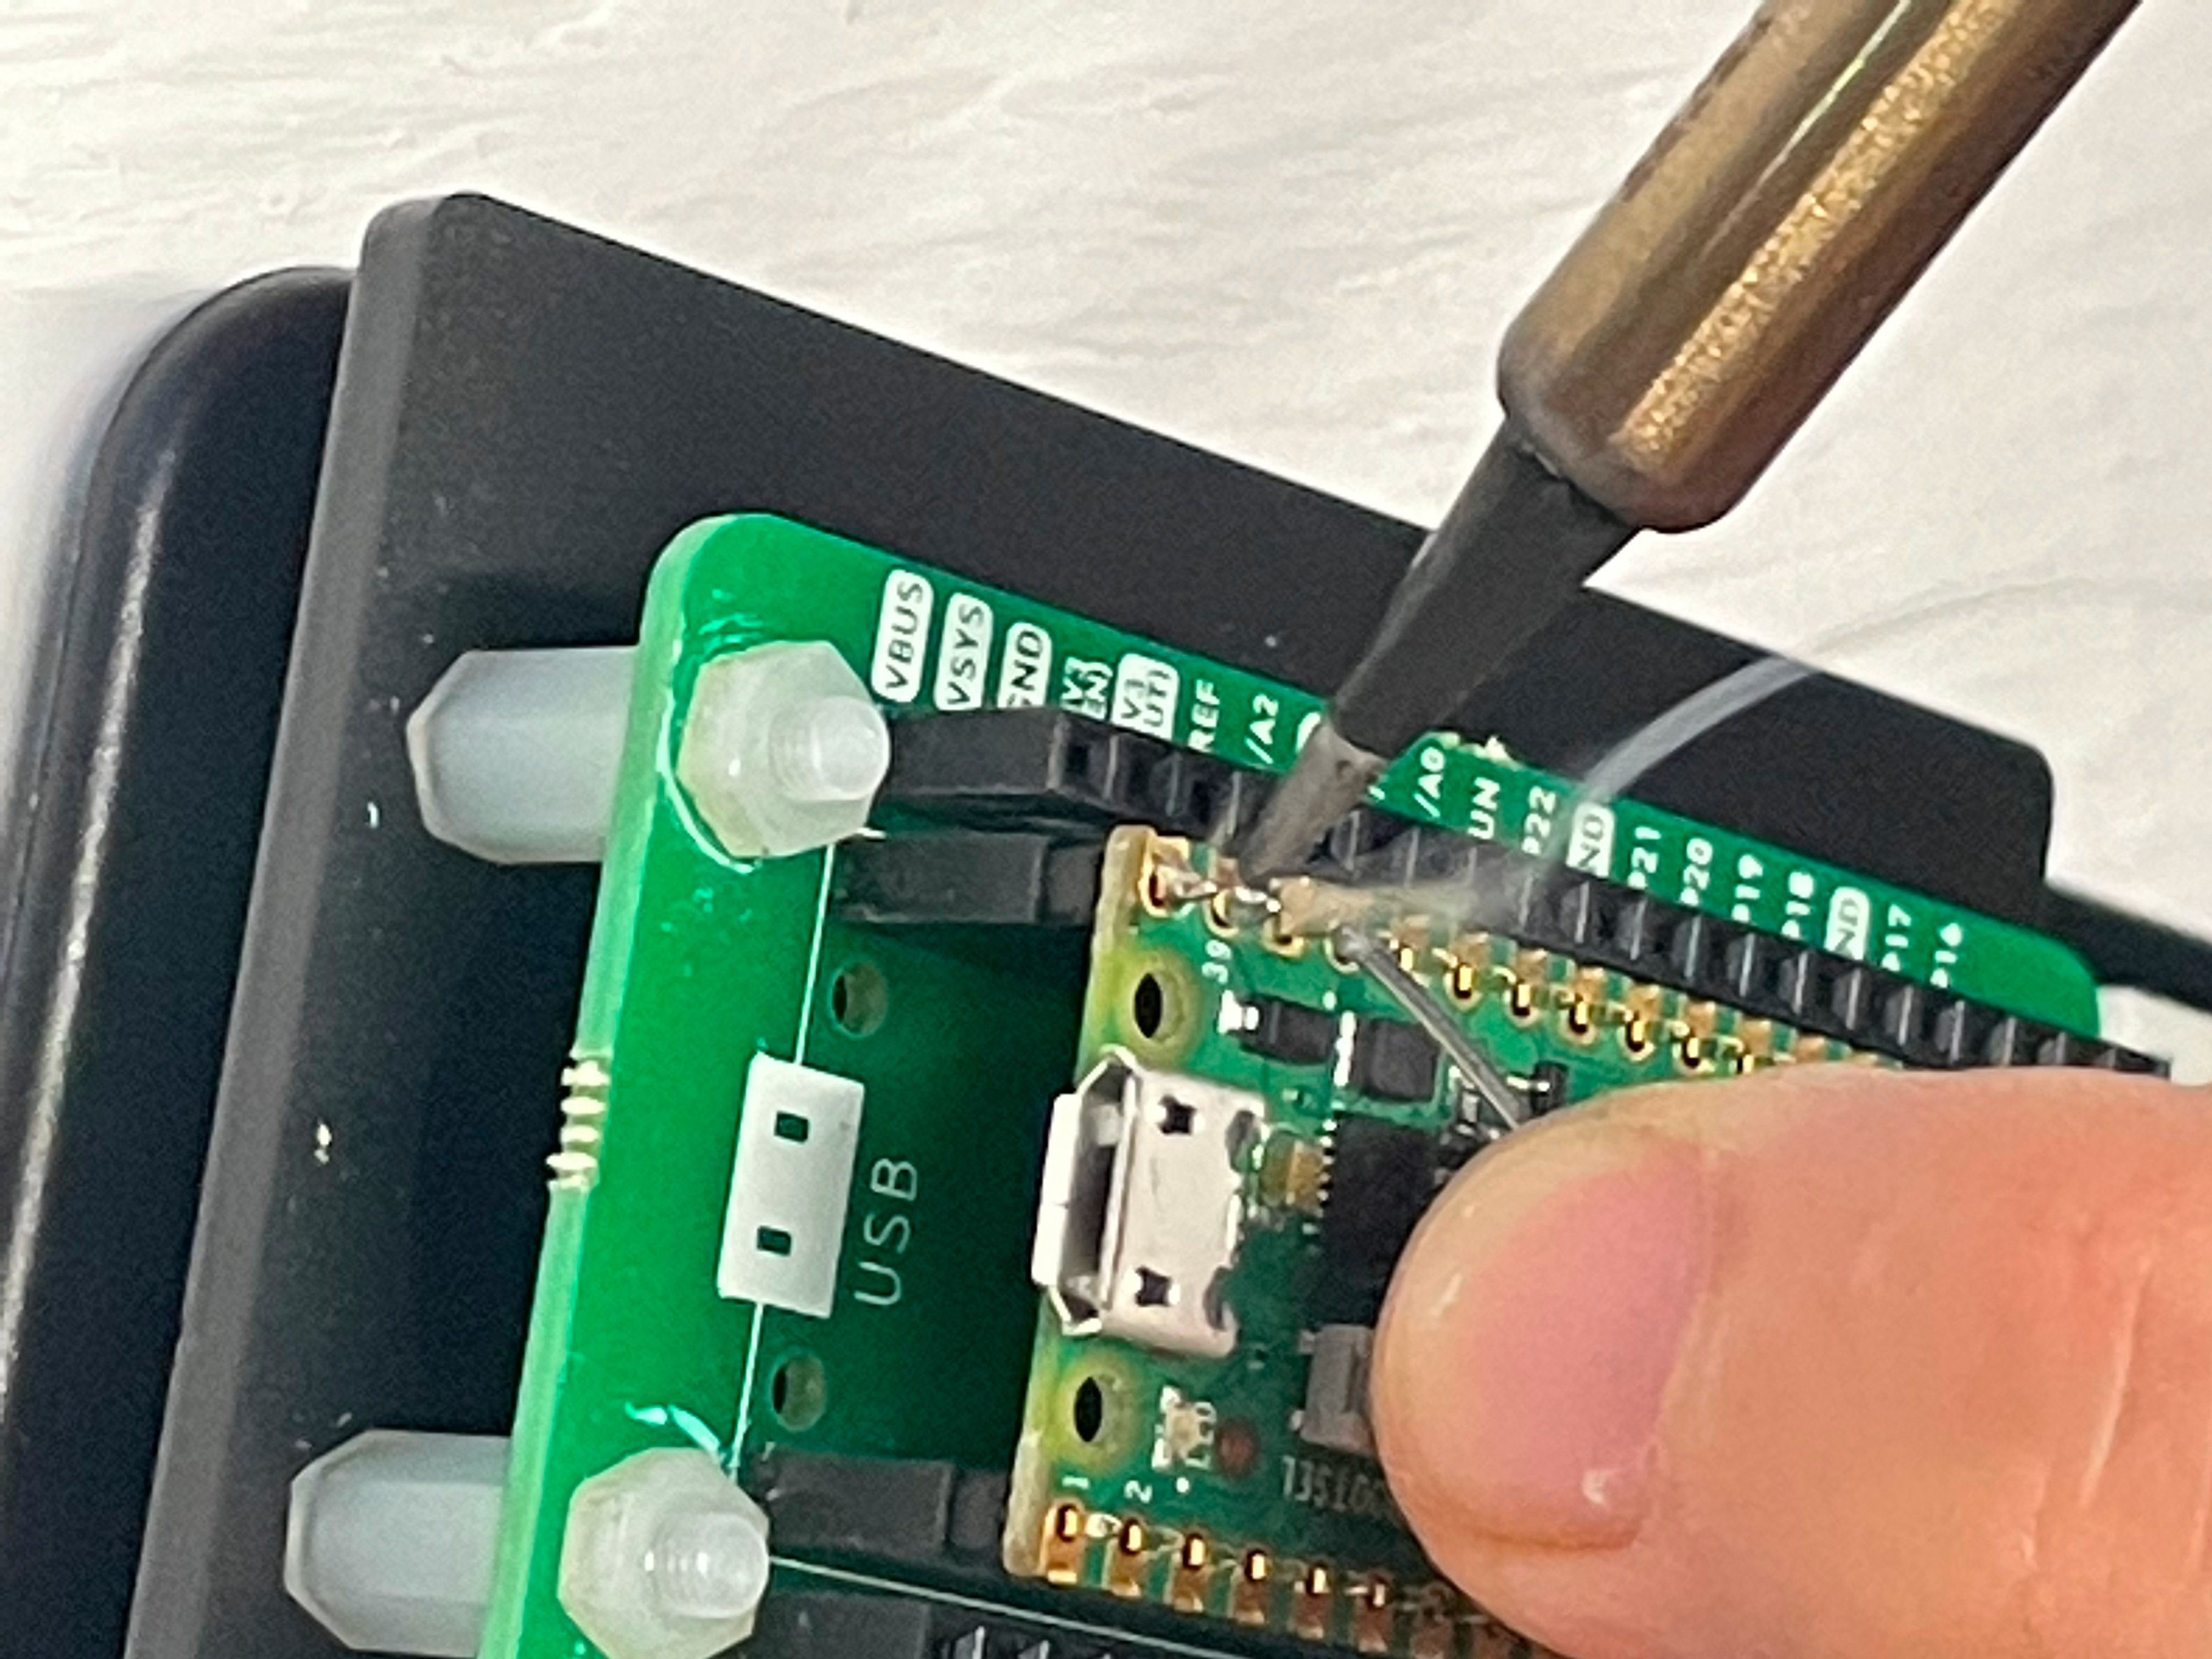 soldering 3rd pin on Raspberry Pico